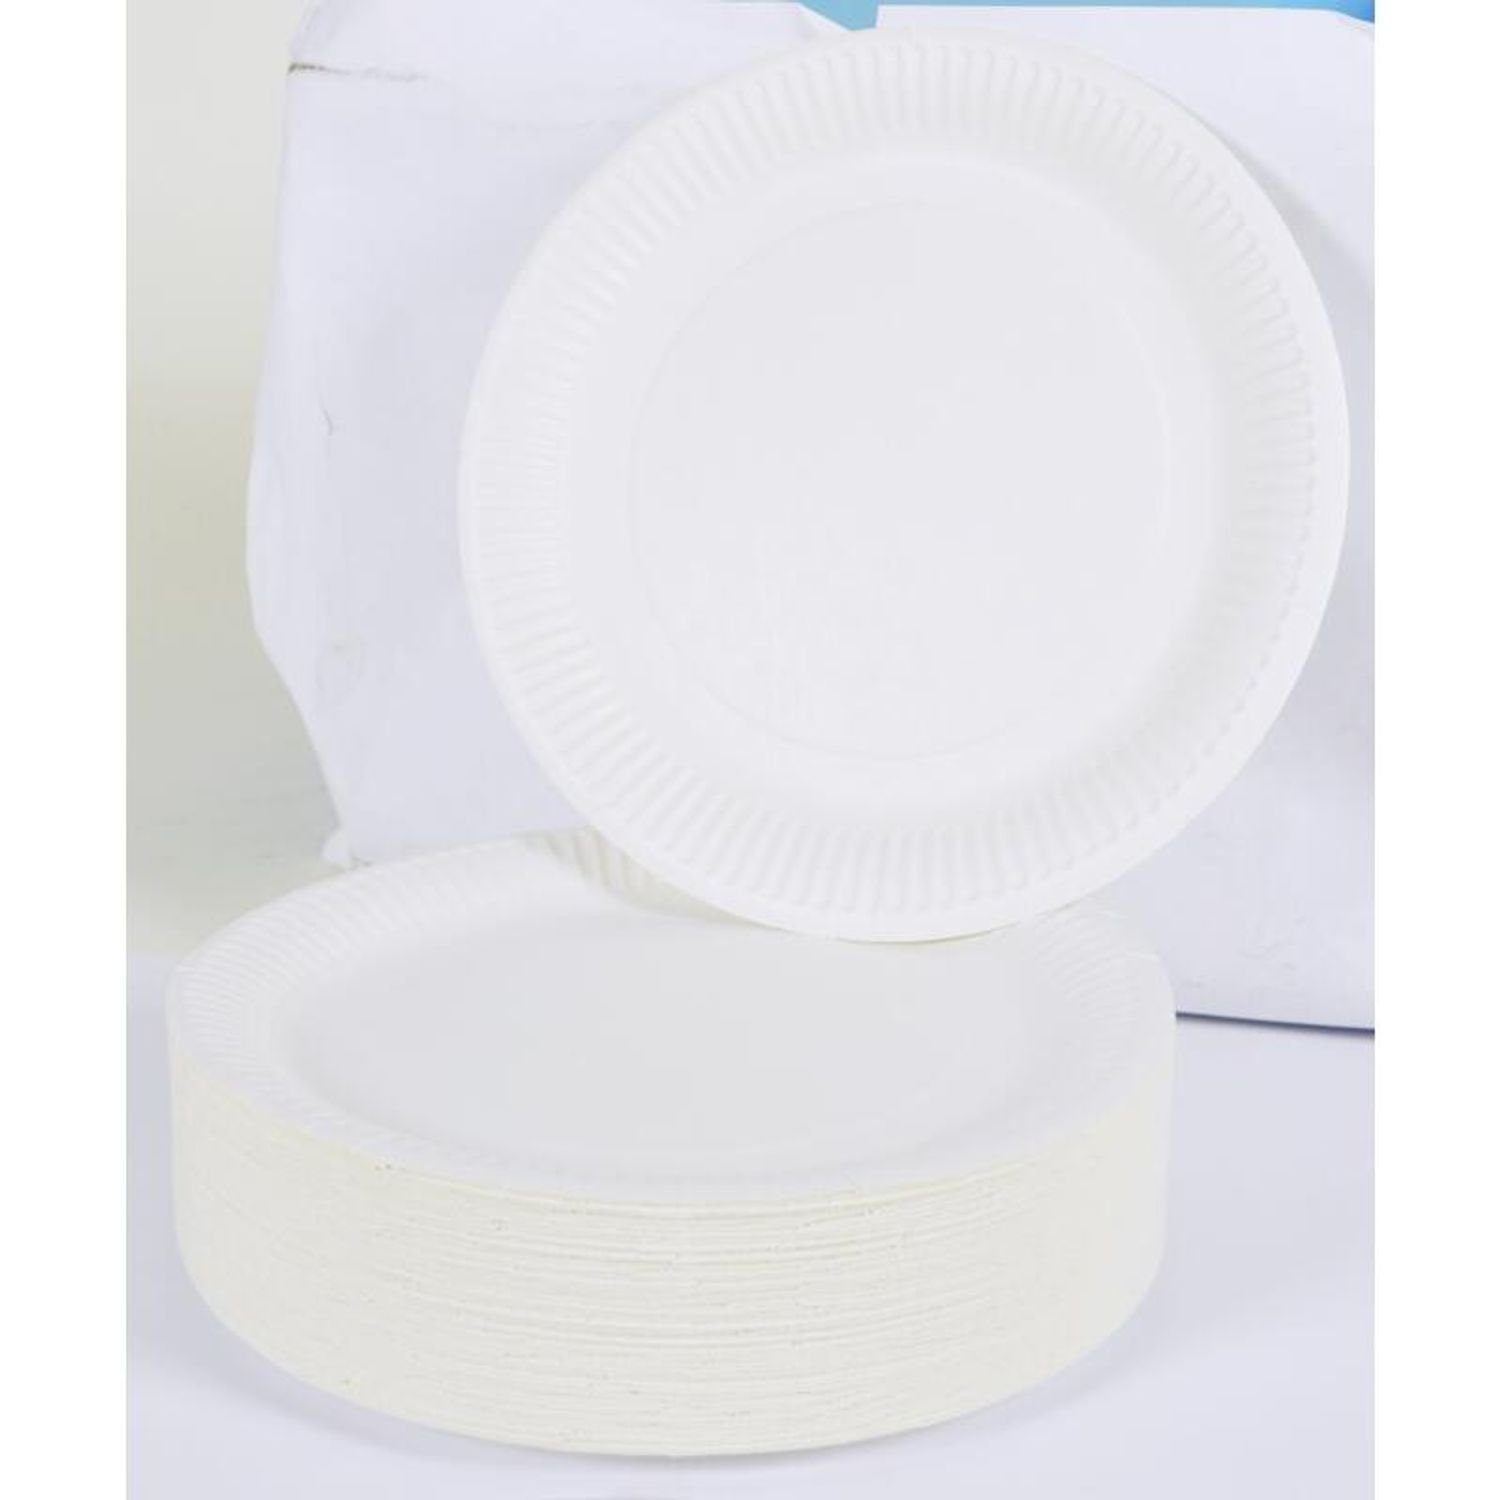 BURI Packung Papier 10x 100er Weiß Pa Grill Teller Speise Einwegschalen Pappteller